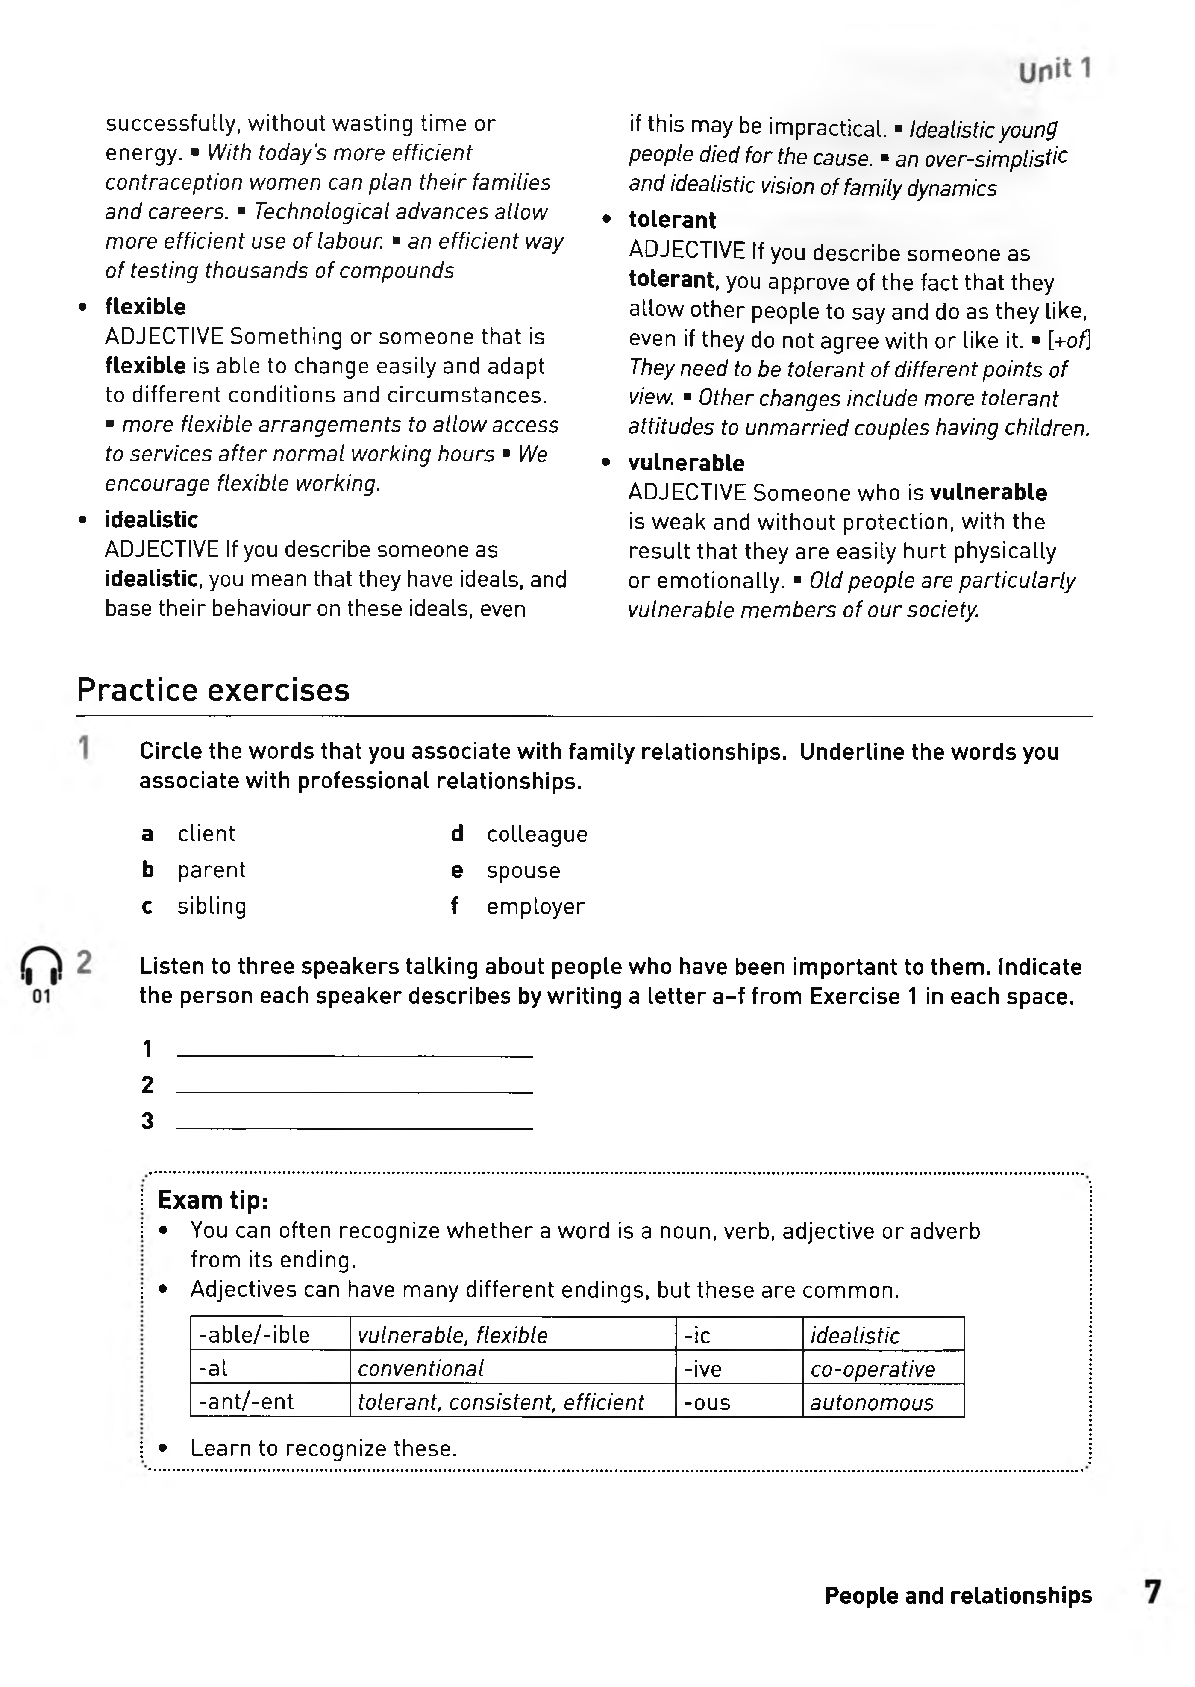 Sách Collins Vocabulary for IELTS pdf | Xem online, tải PDF miễn phí (trang 8)